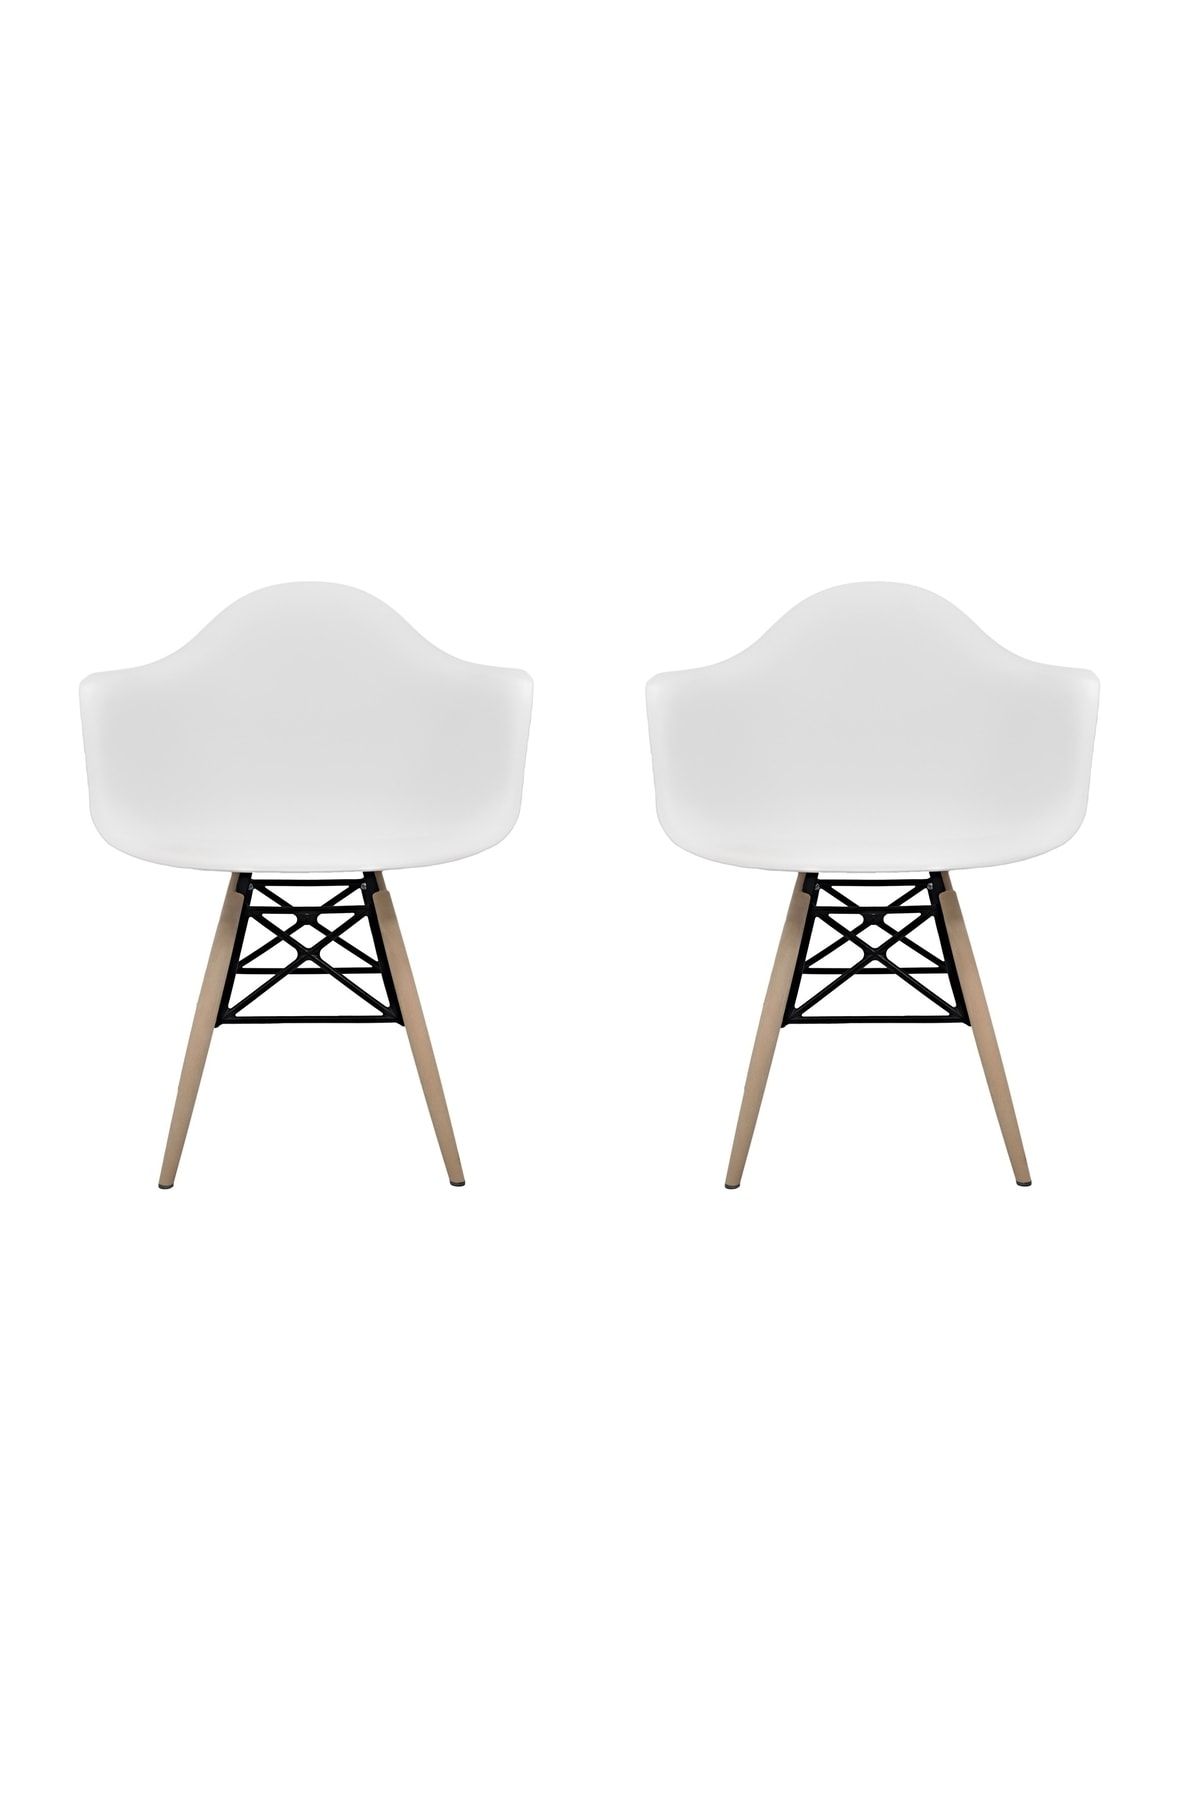 Dorcia Home Kolçaklı Eames Plastik Kafesli Sandalye - 2 Adet - Cafe Balkon Mutfak Sandalyesi